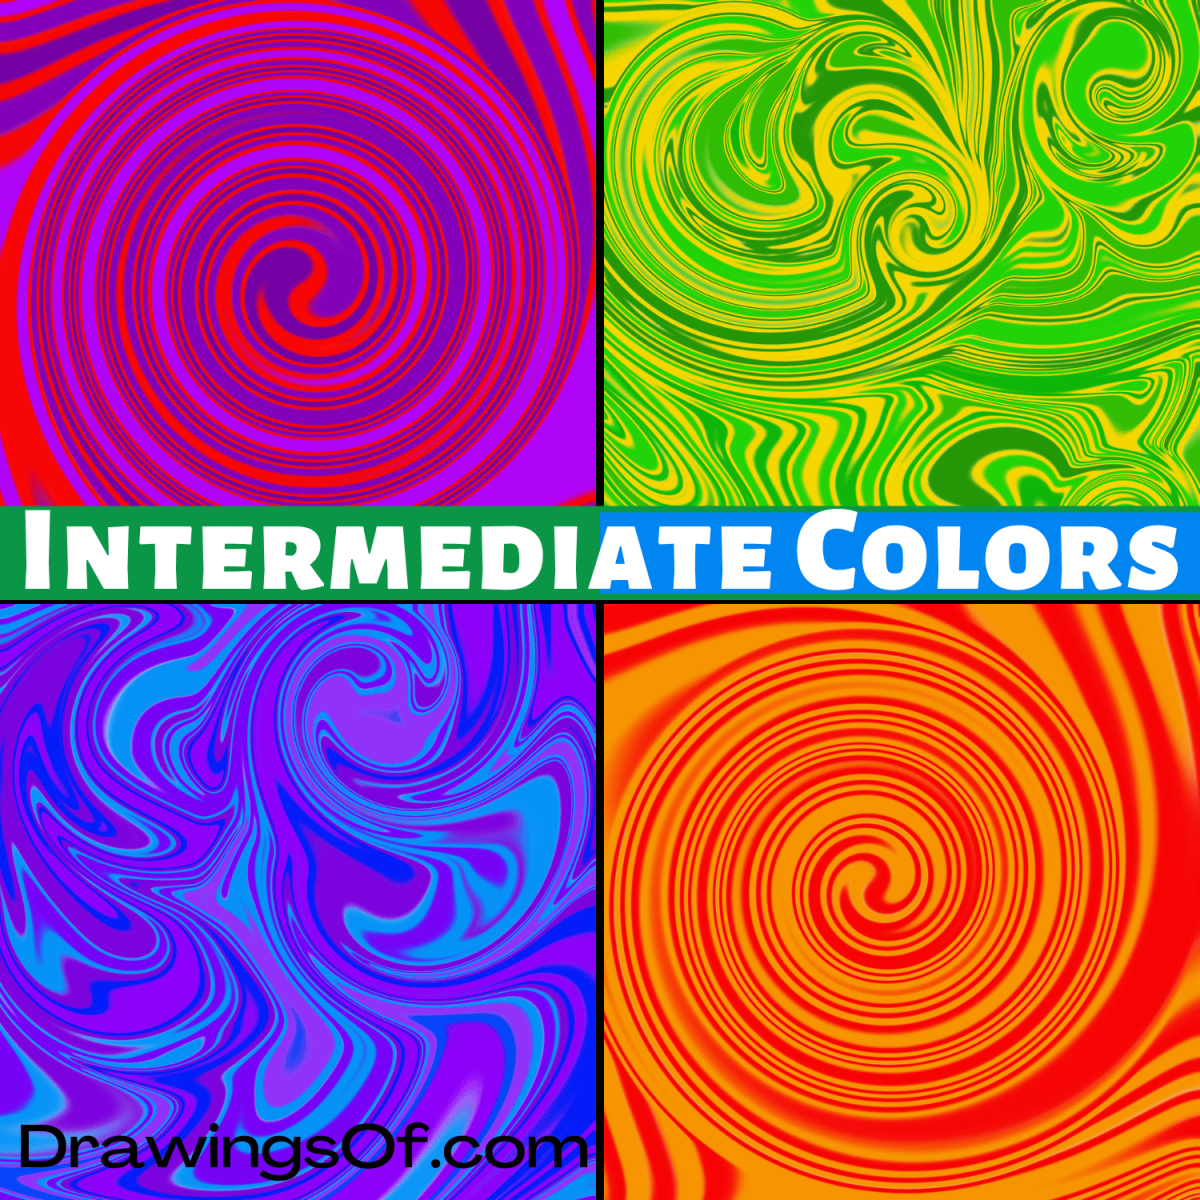 Intermediate colors